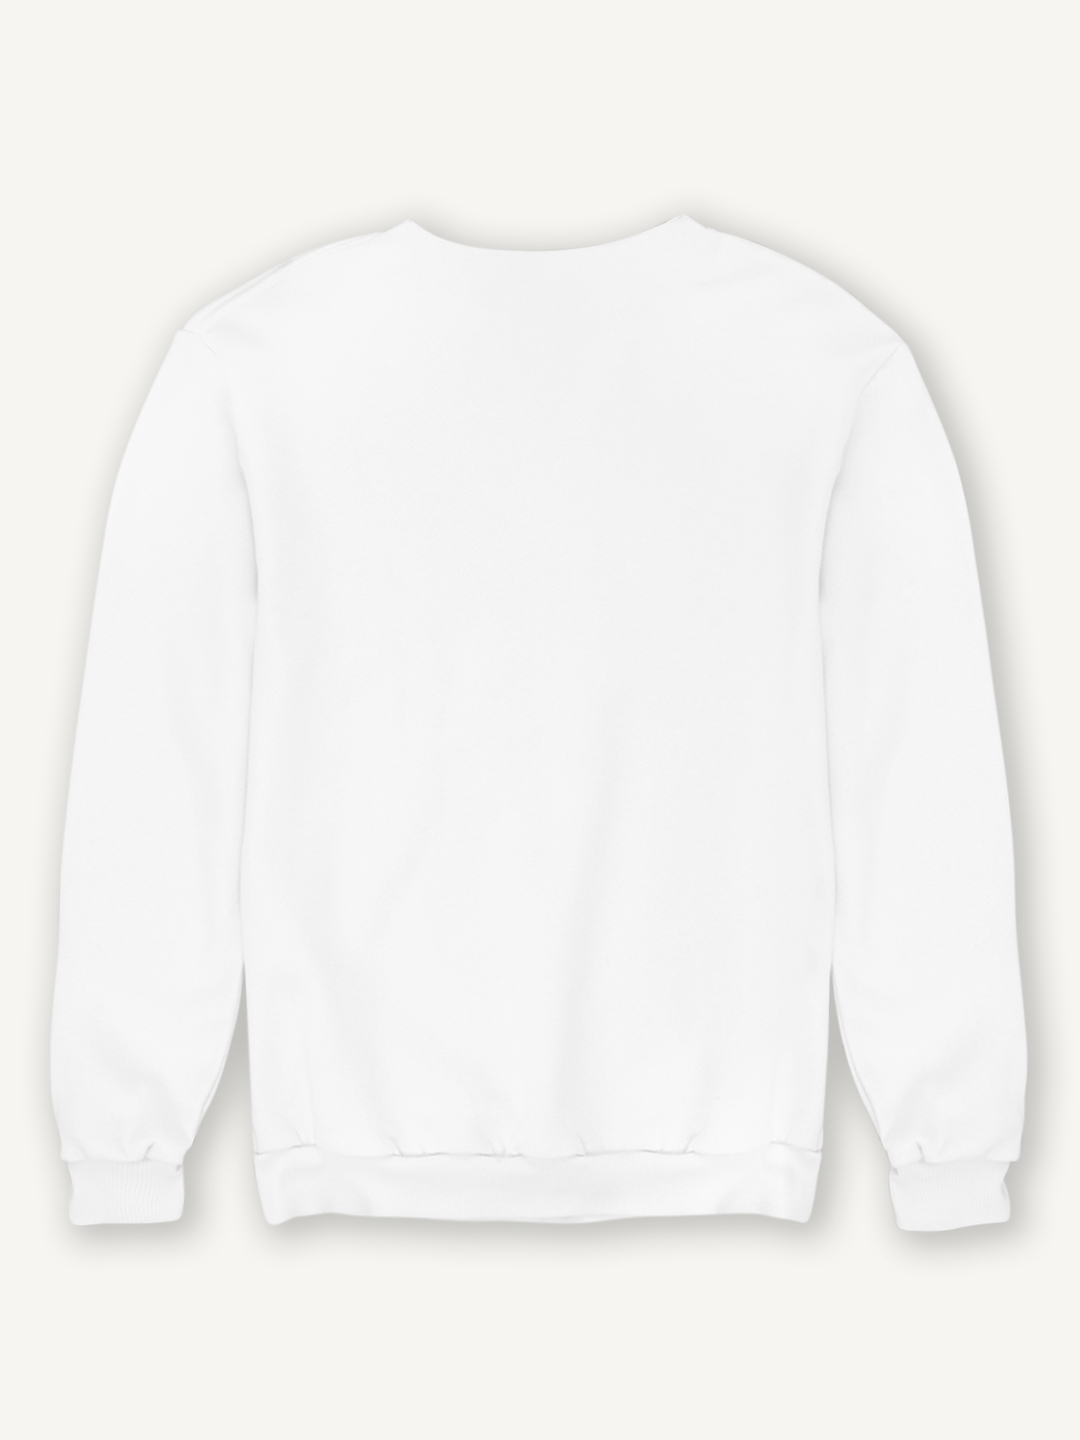 creativeideas.store | Christmas Bell Pocket White Unisex Cotton Sweatshirt 1